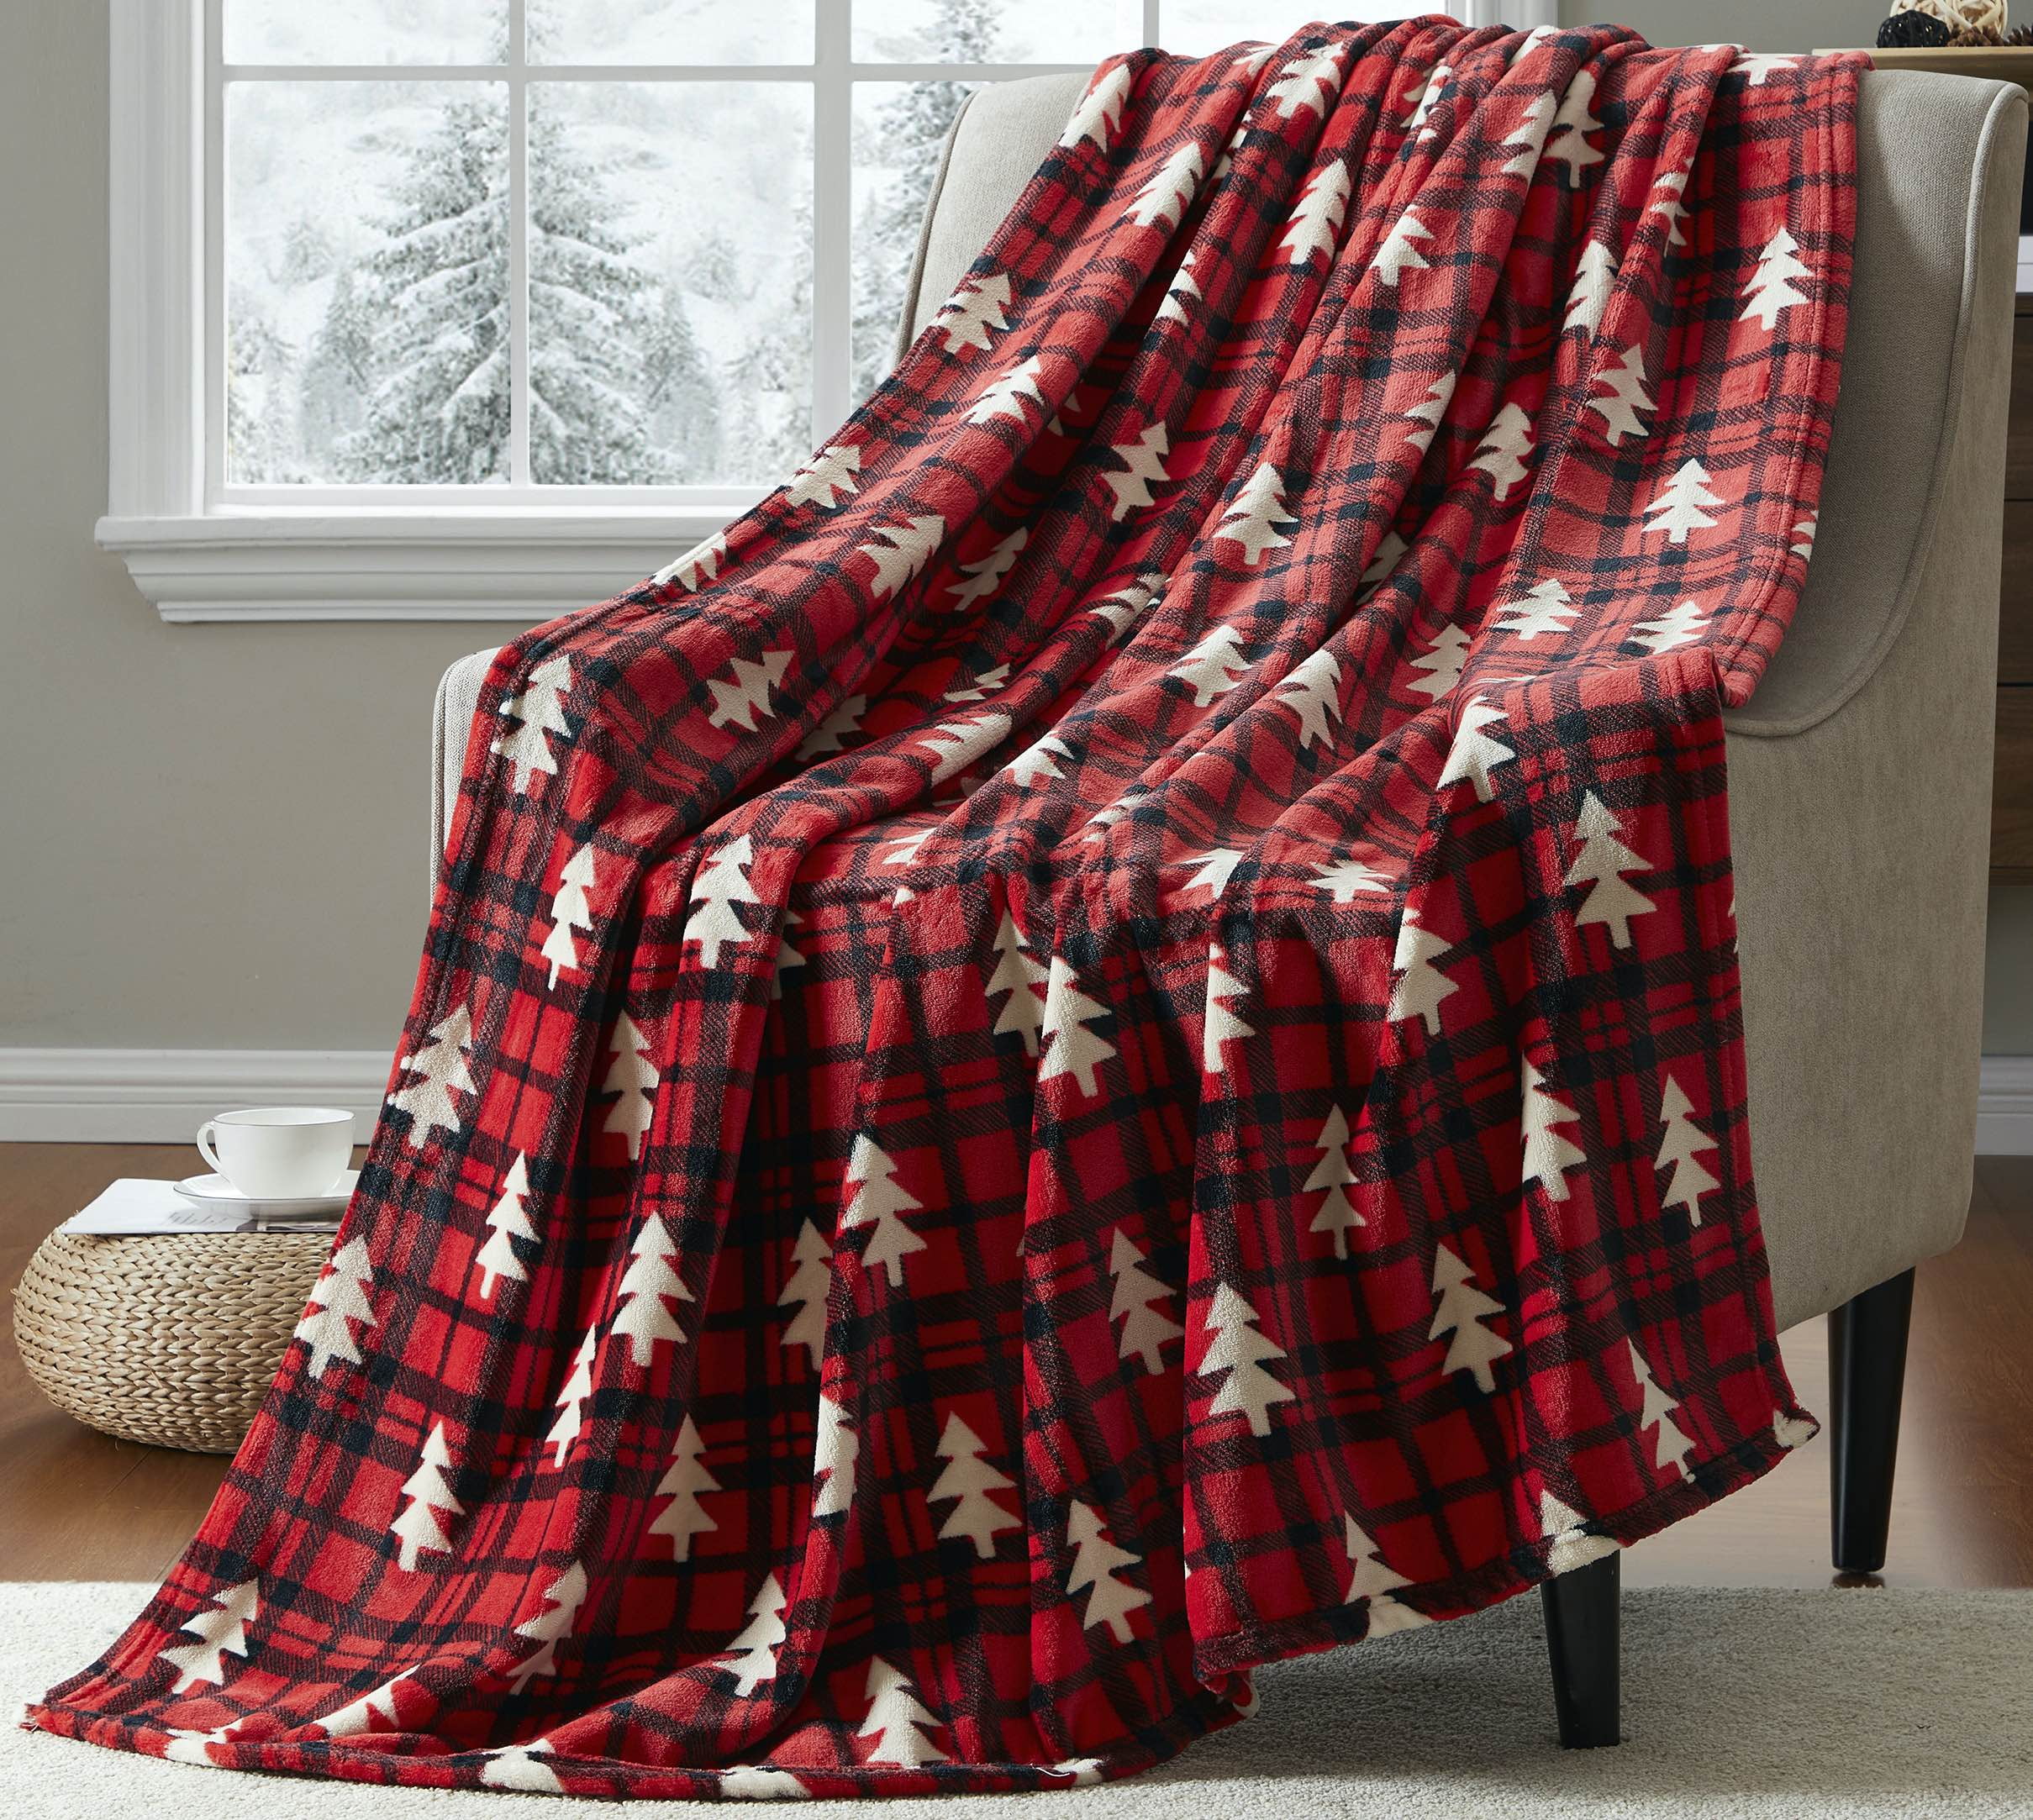 NEW Super Soft ‘Christmas Tree’ Throw Plaid Holiday Blanket 